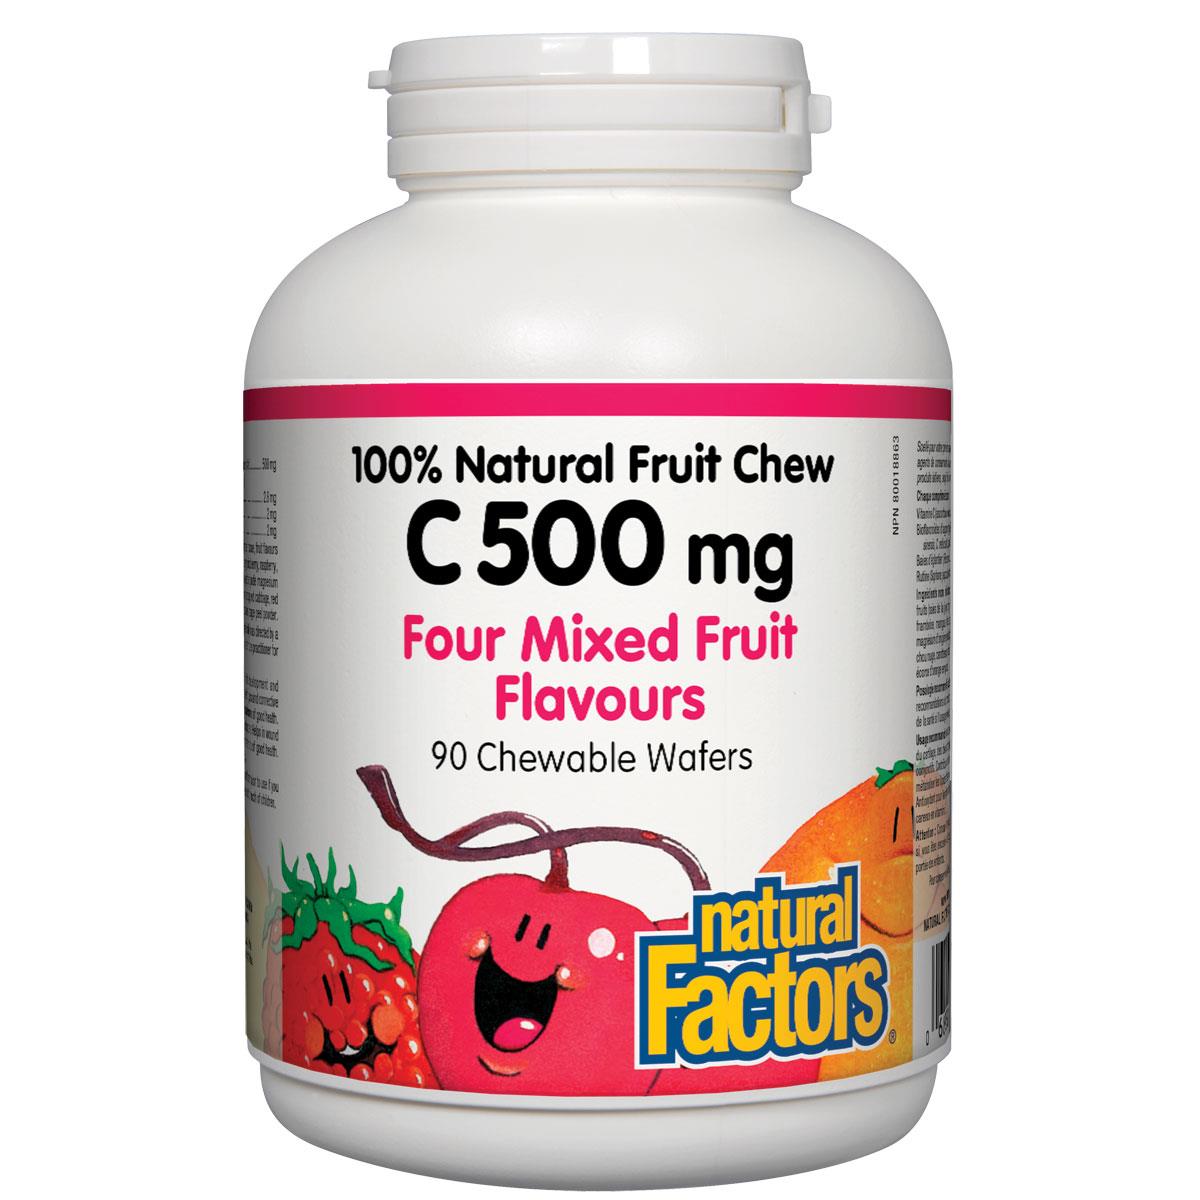 Natural Factors Vitamin C 100% Natural Fruit Chew (Mixed Fruit Flavour), 500mg, 90 Chewables